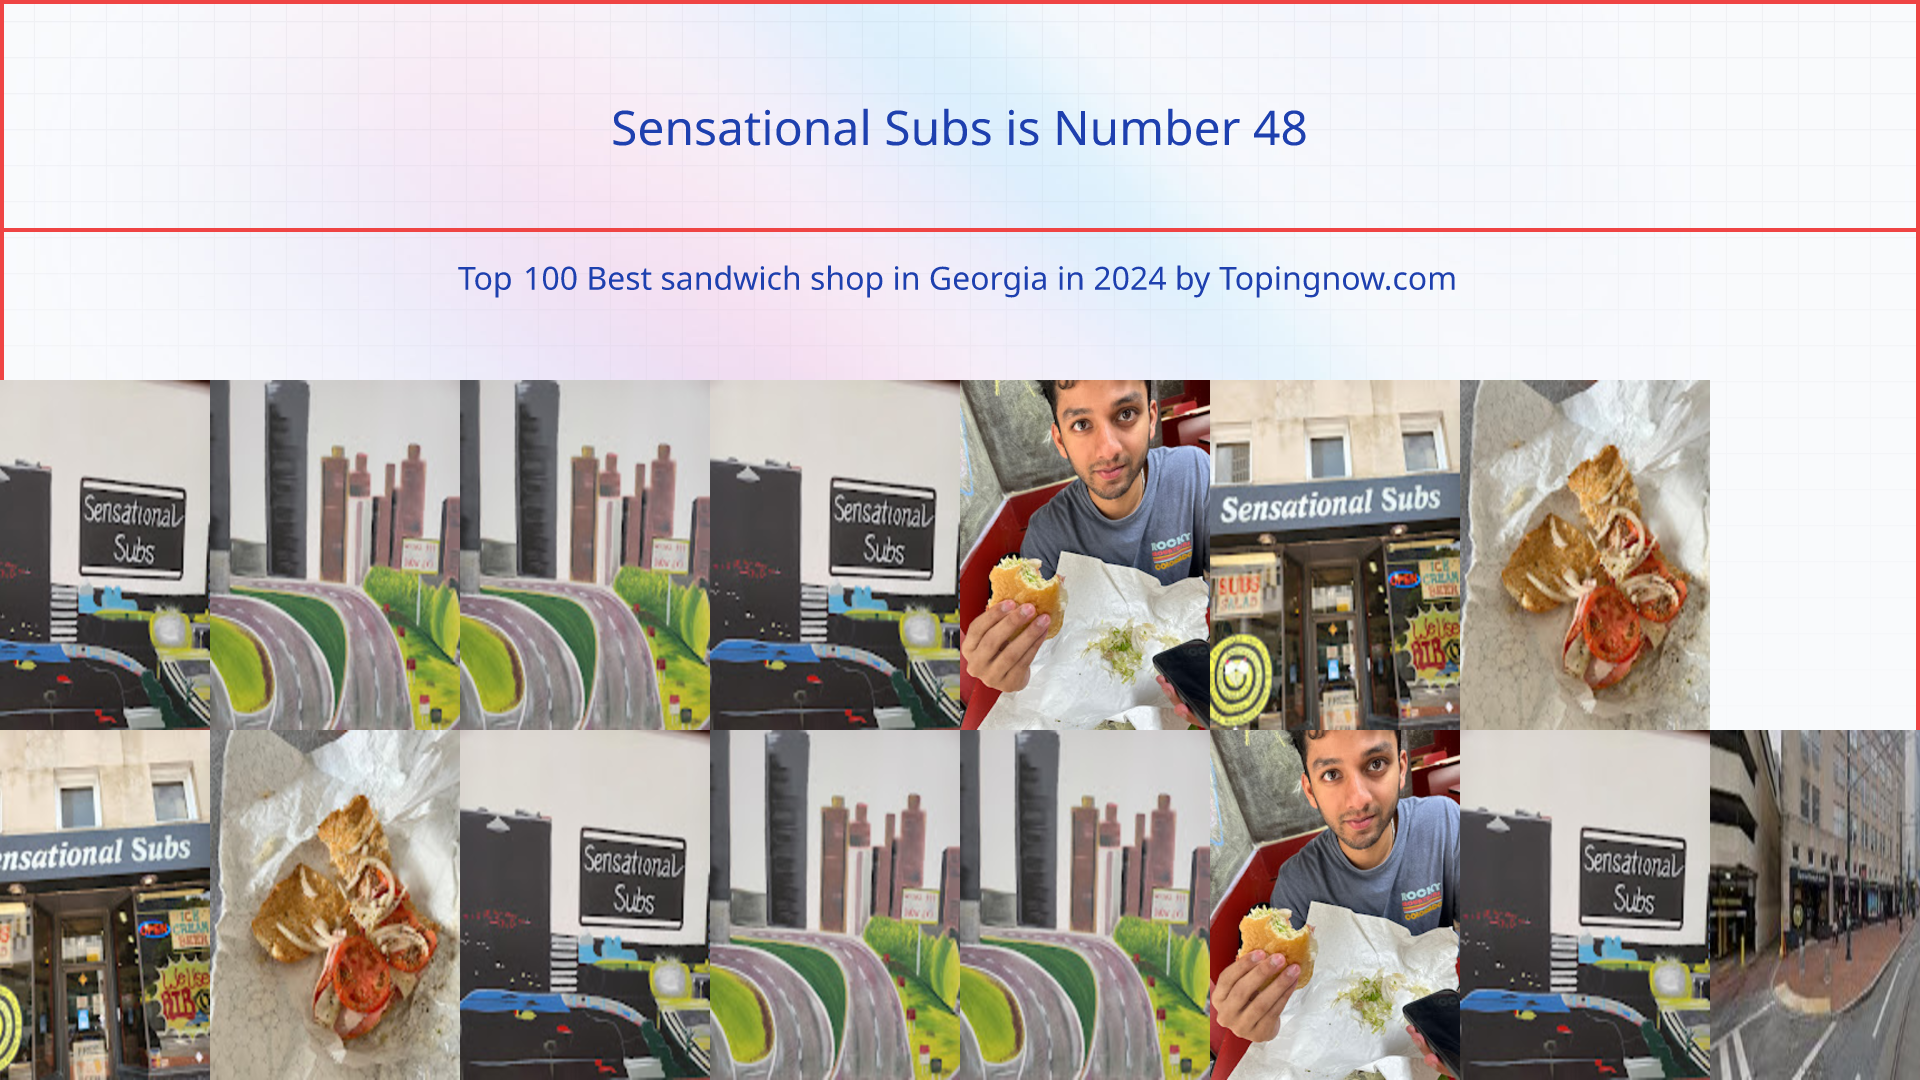 Sensational Subs: Top 100 Best sandwich shop in Georgia in 2024